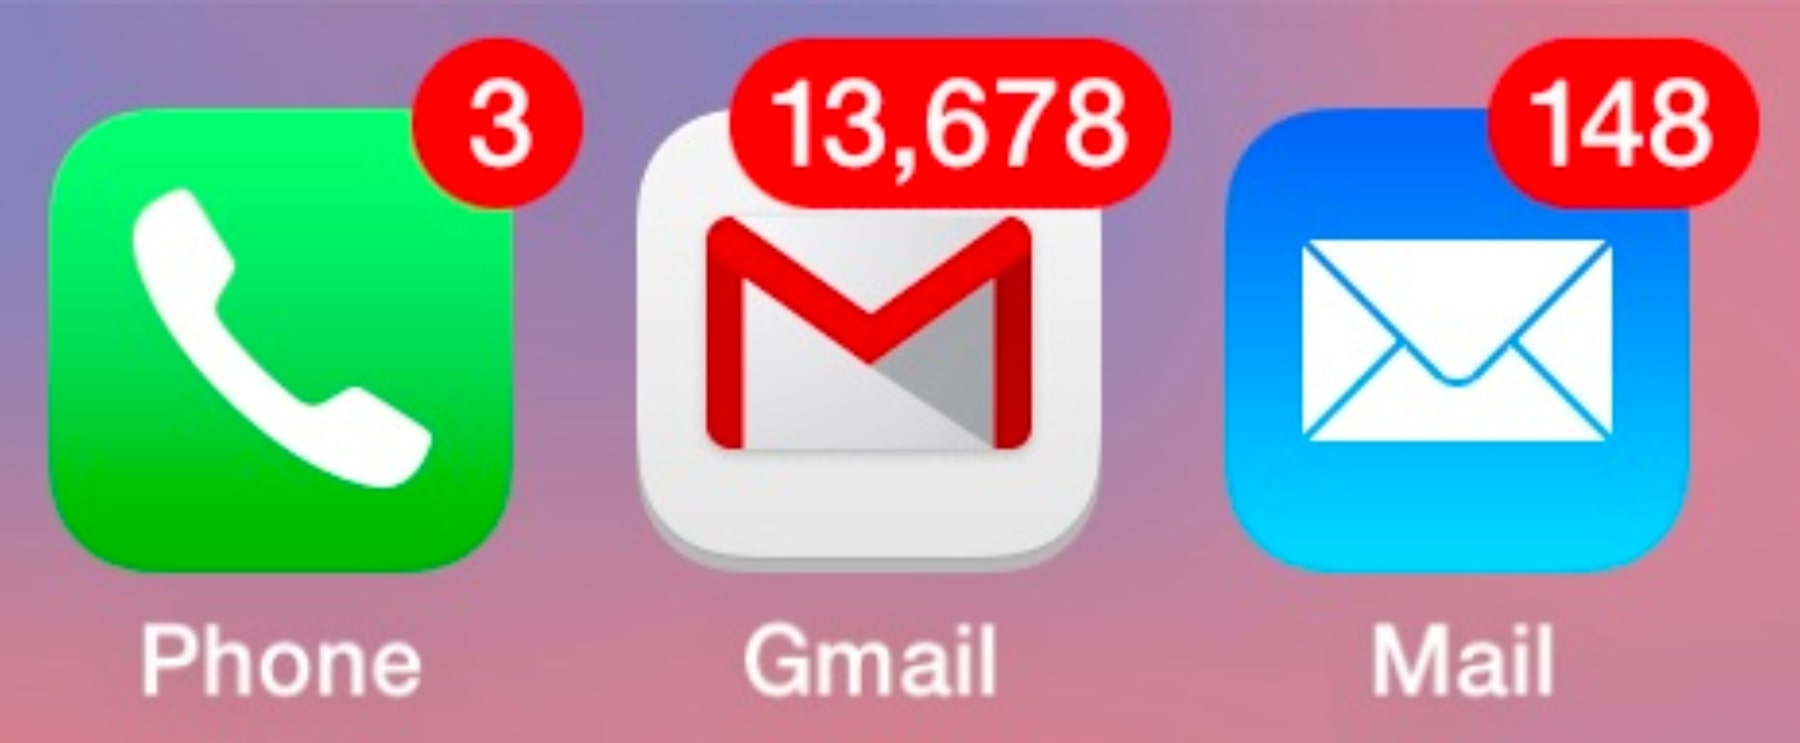 10,000 unread messages notification